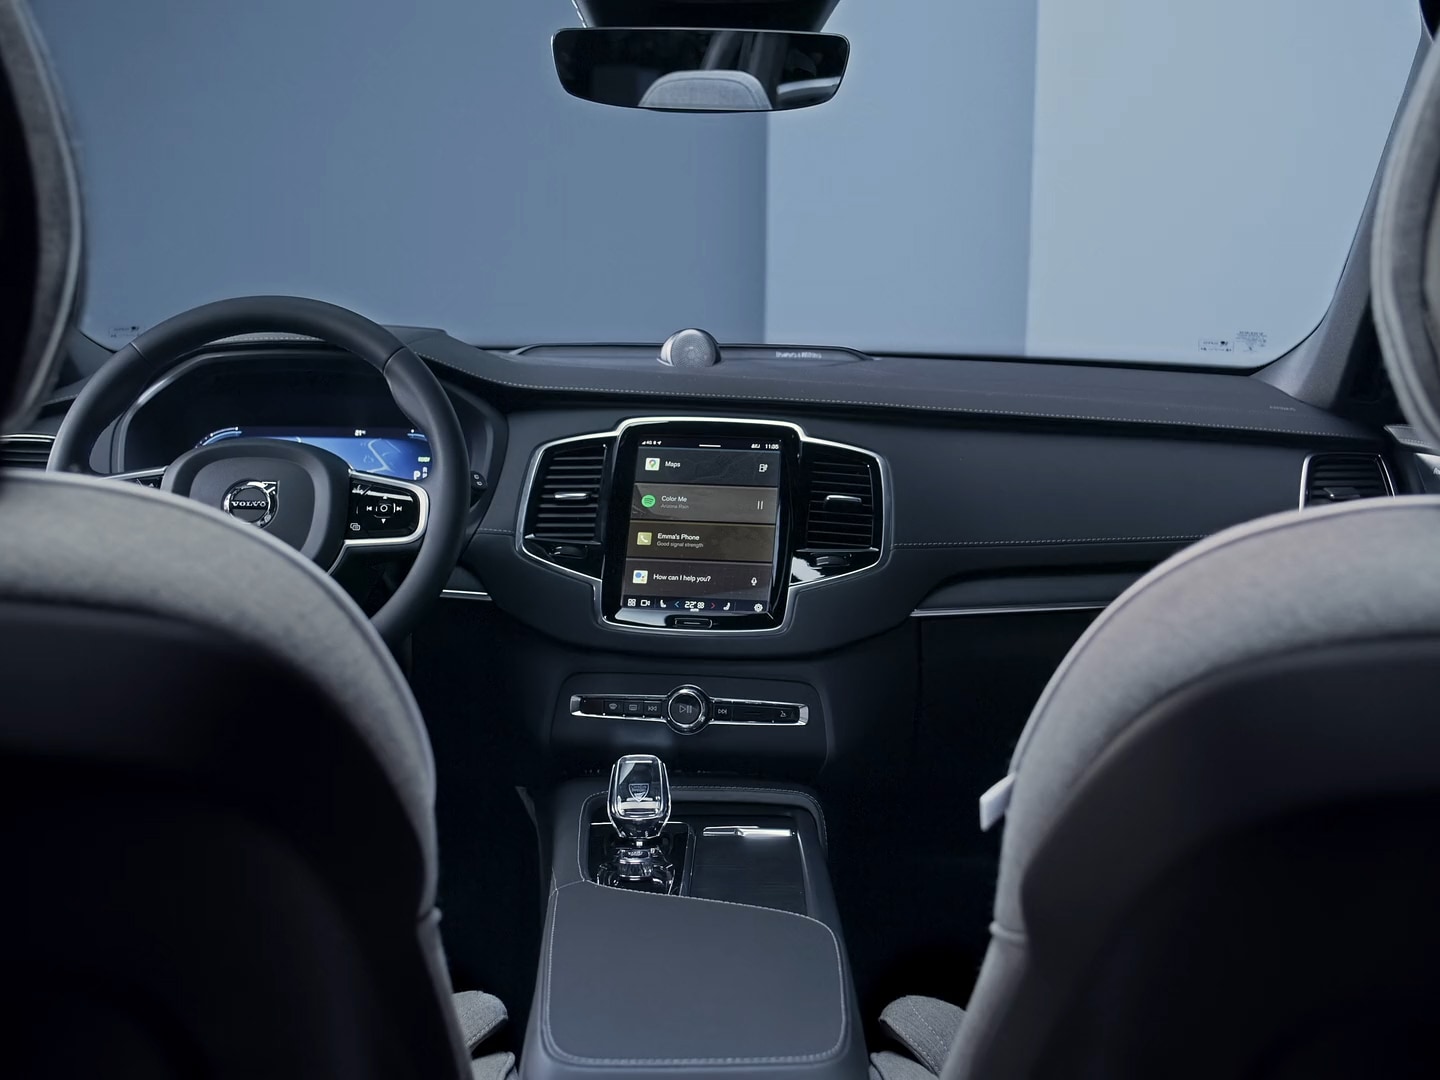 Ratt, instrumentpanel, midtdisplay for infotainment og midtkonsoll i Volvo XC90 ladbar hybrid.